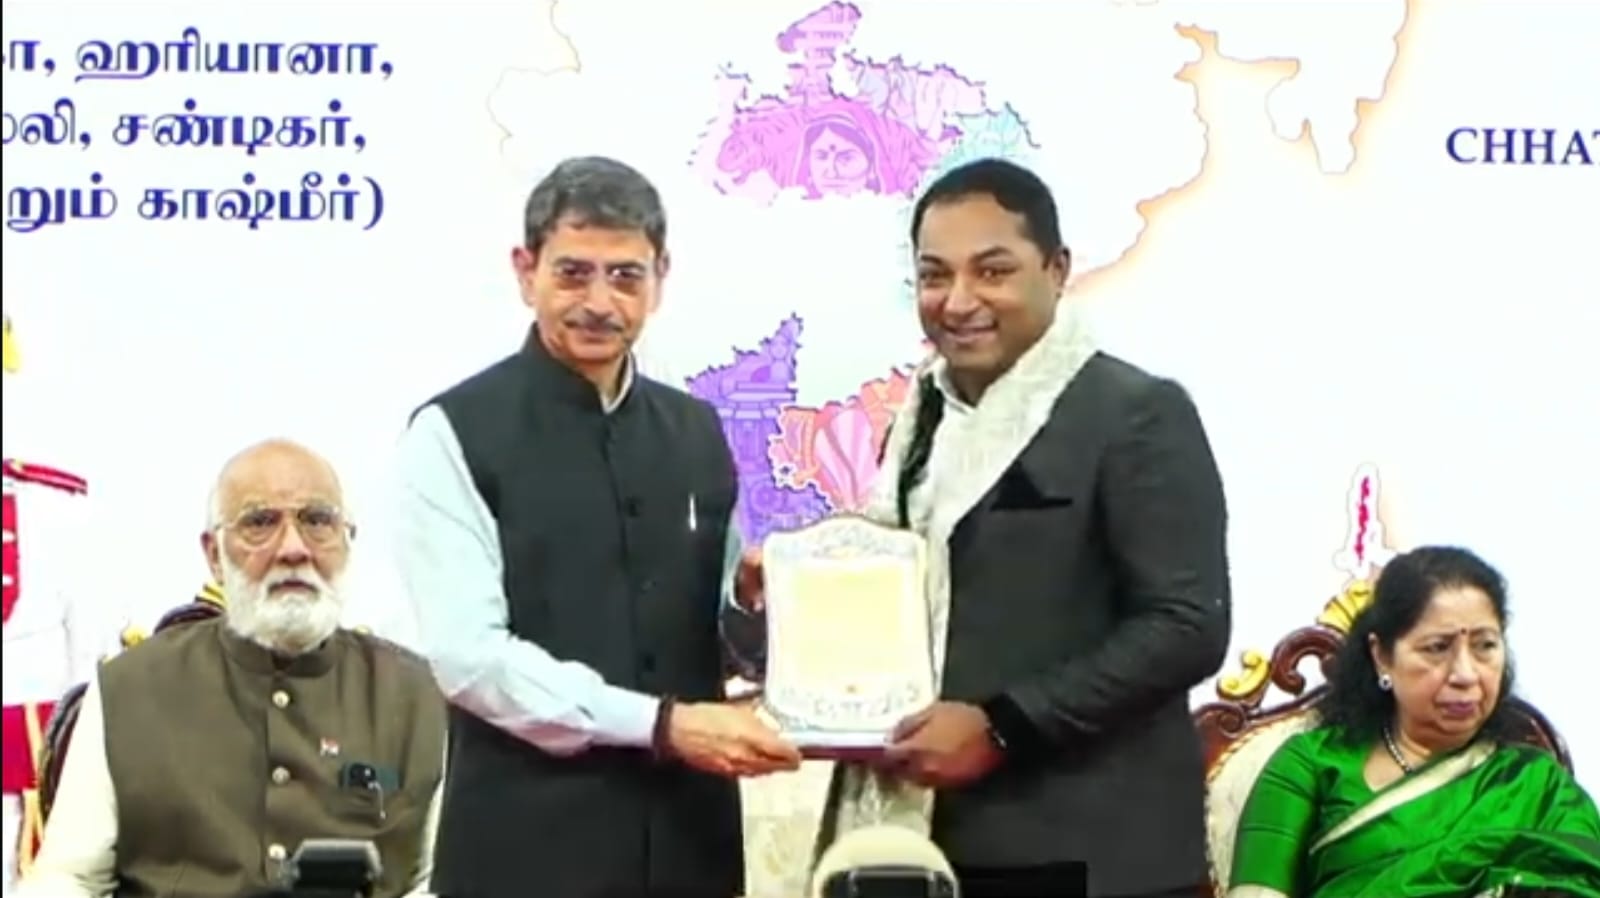 Vasavi Foundation – Tamil Nadu – Sai Chandan s/o Sri Ramakrishna Tanguturi, Chennai – received Award from Tamil Nadu Governor.